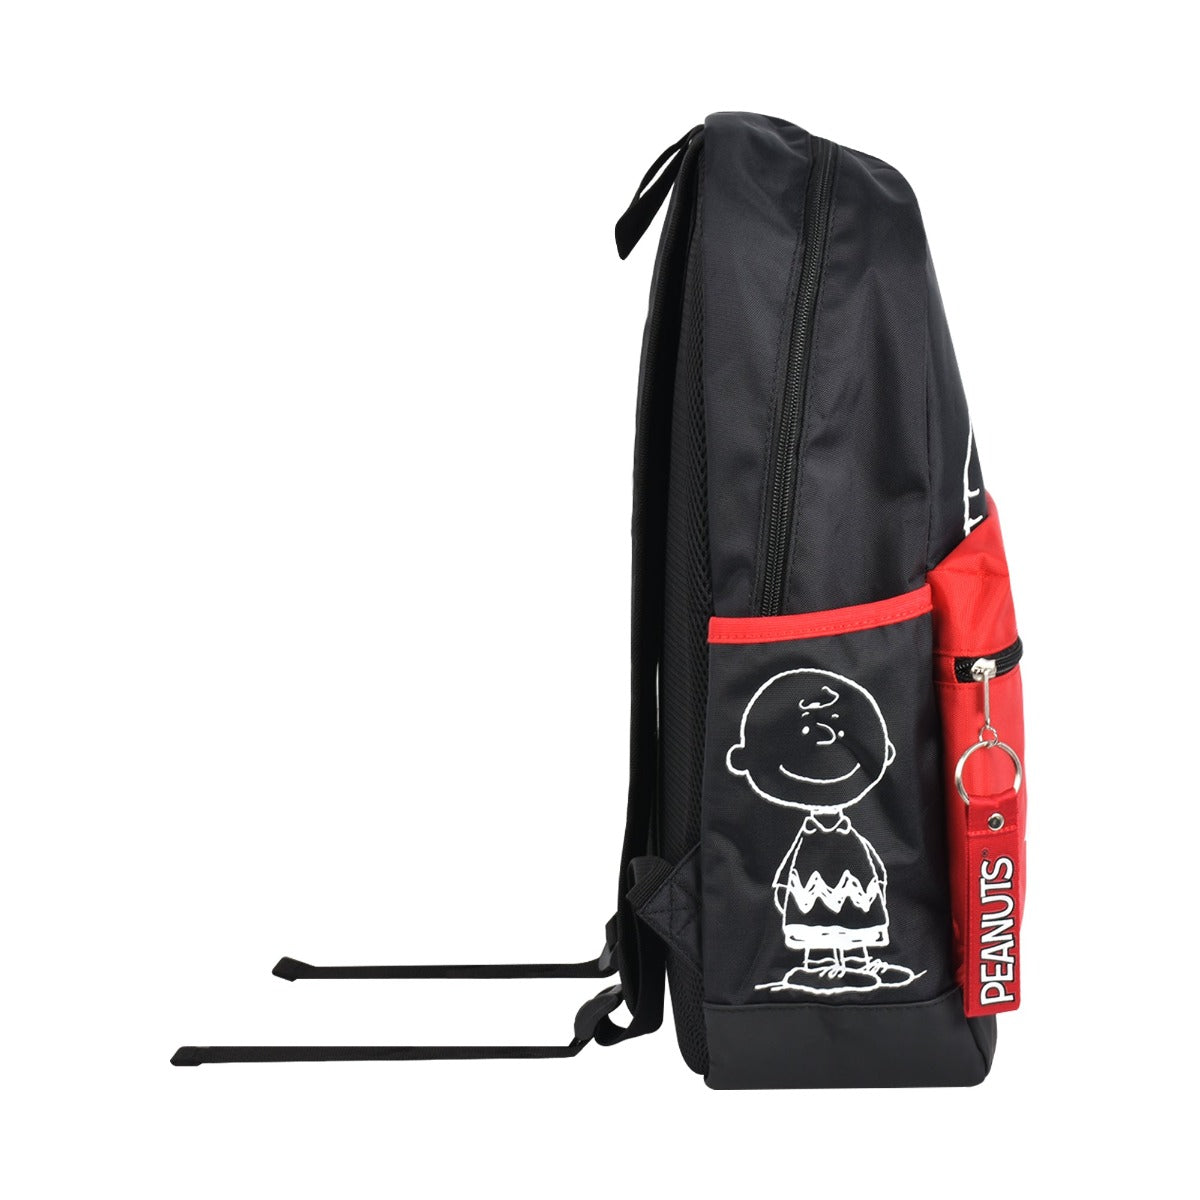 Black red Ful Peanuts Snoopy Charlie Brown Woodstock backpack - best backpacks for travel